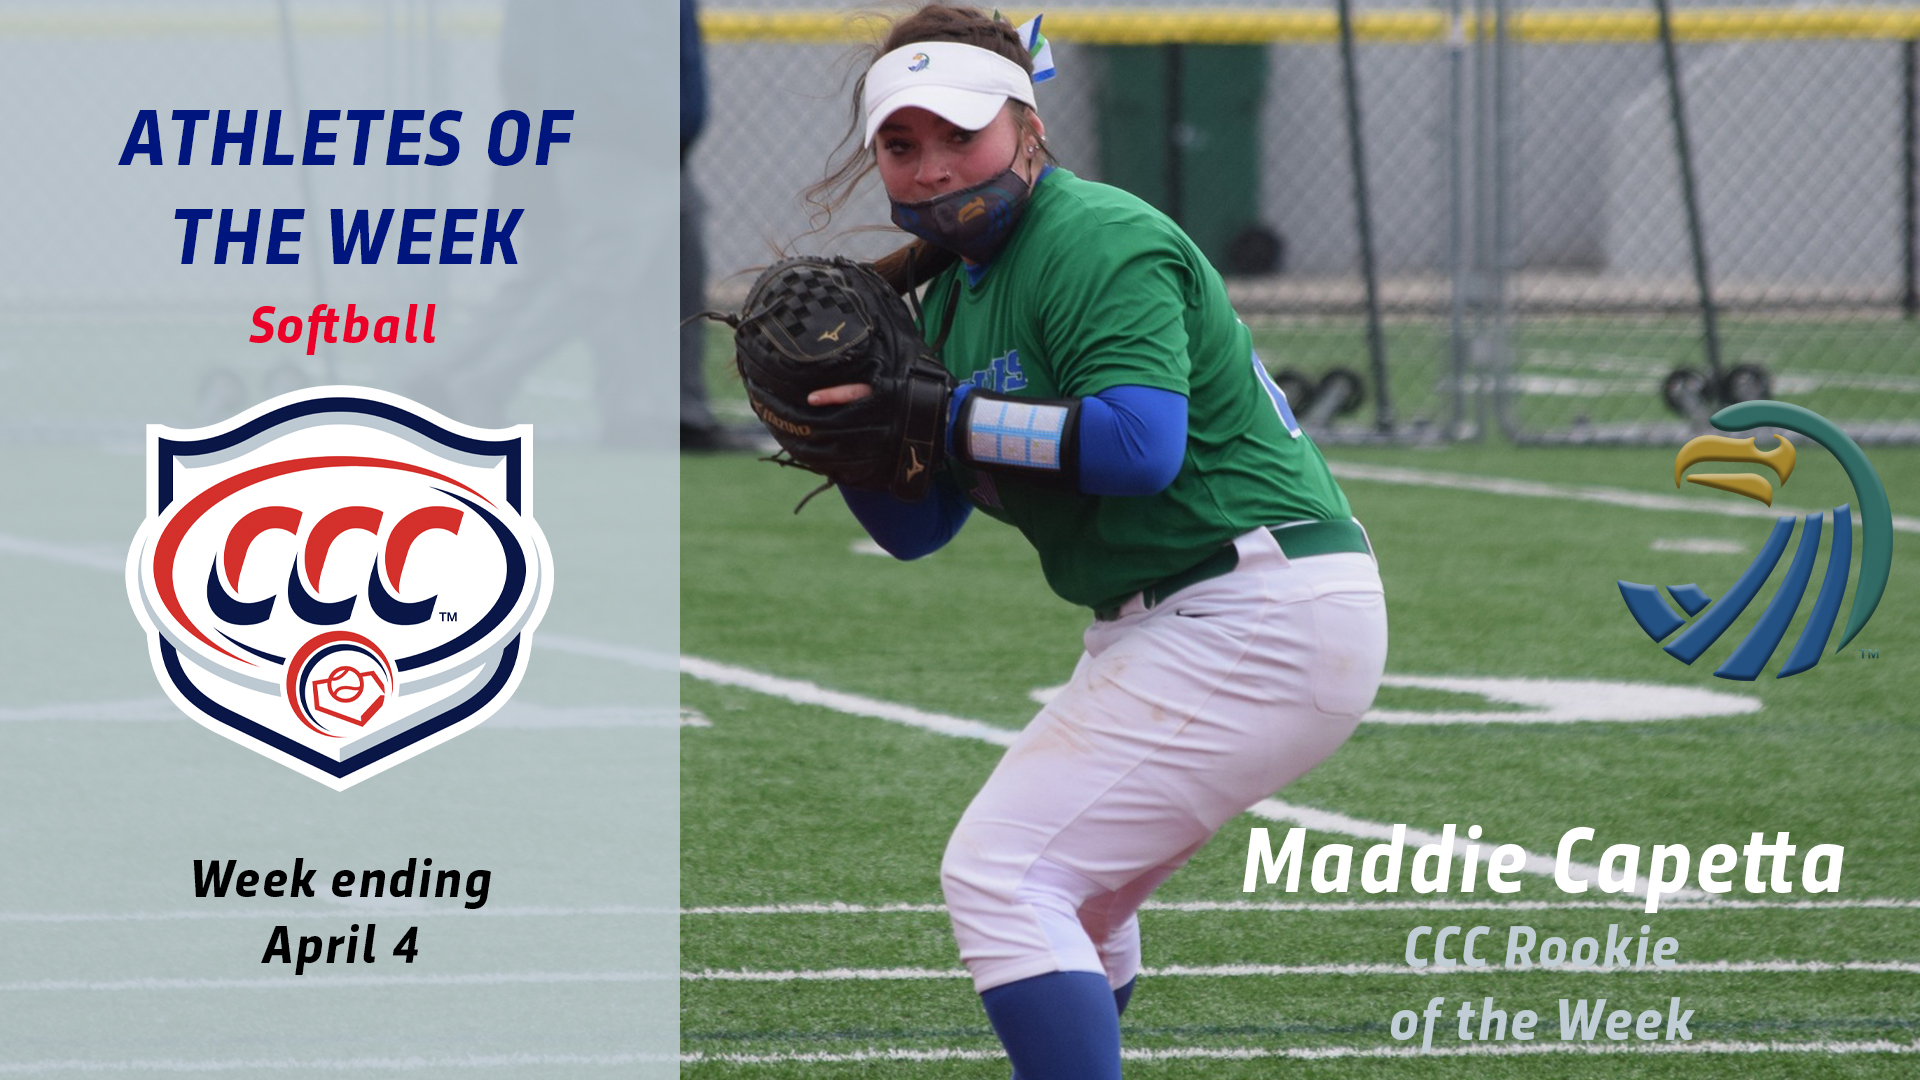 CCC Rookie of the Week: Maddie Capetta (week ending April 4)